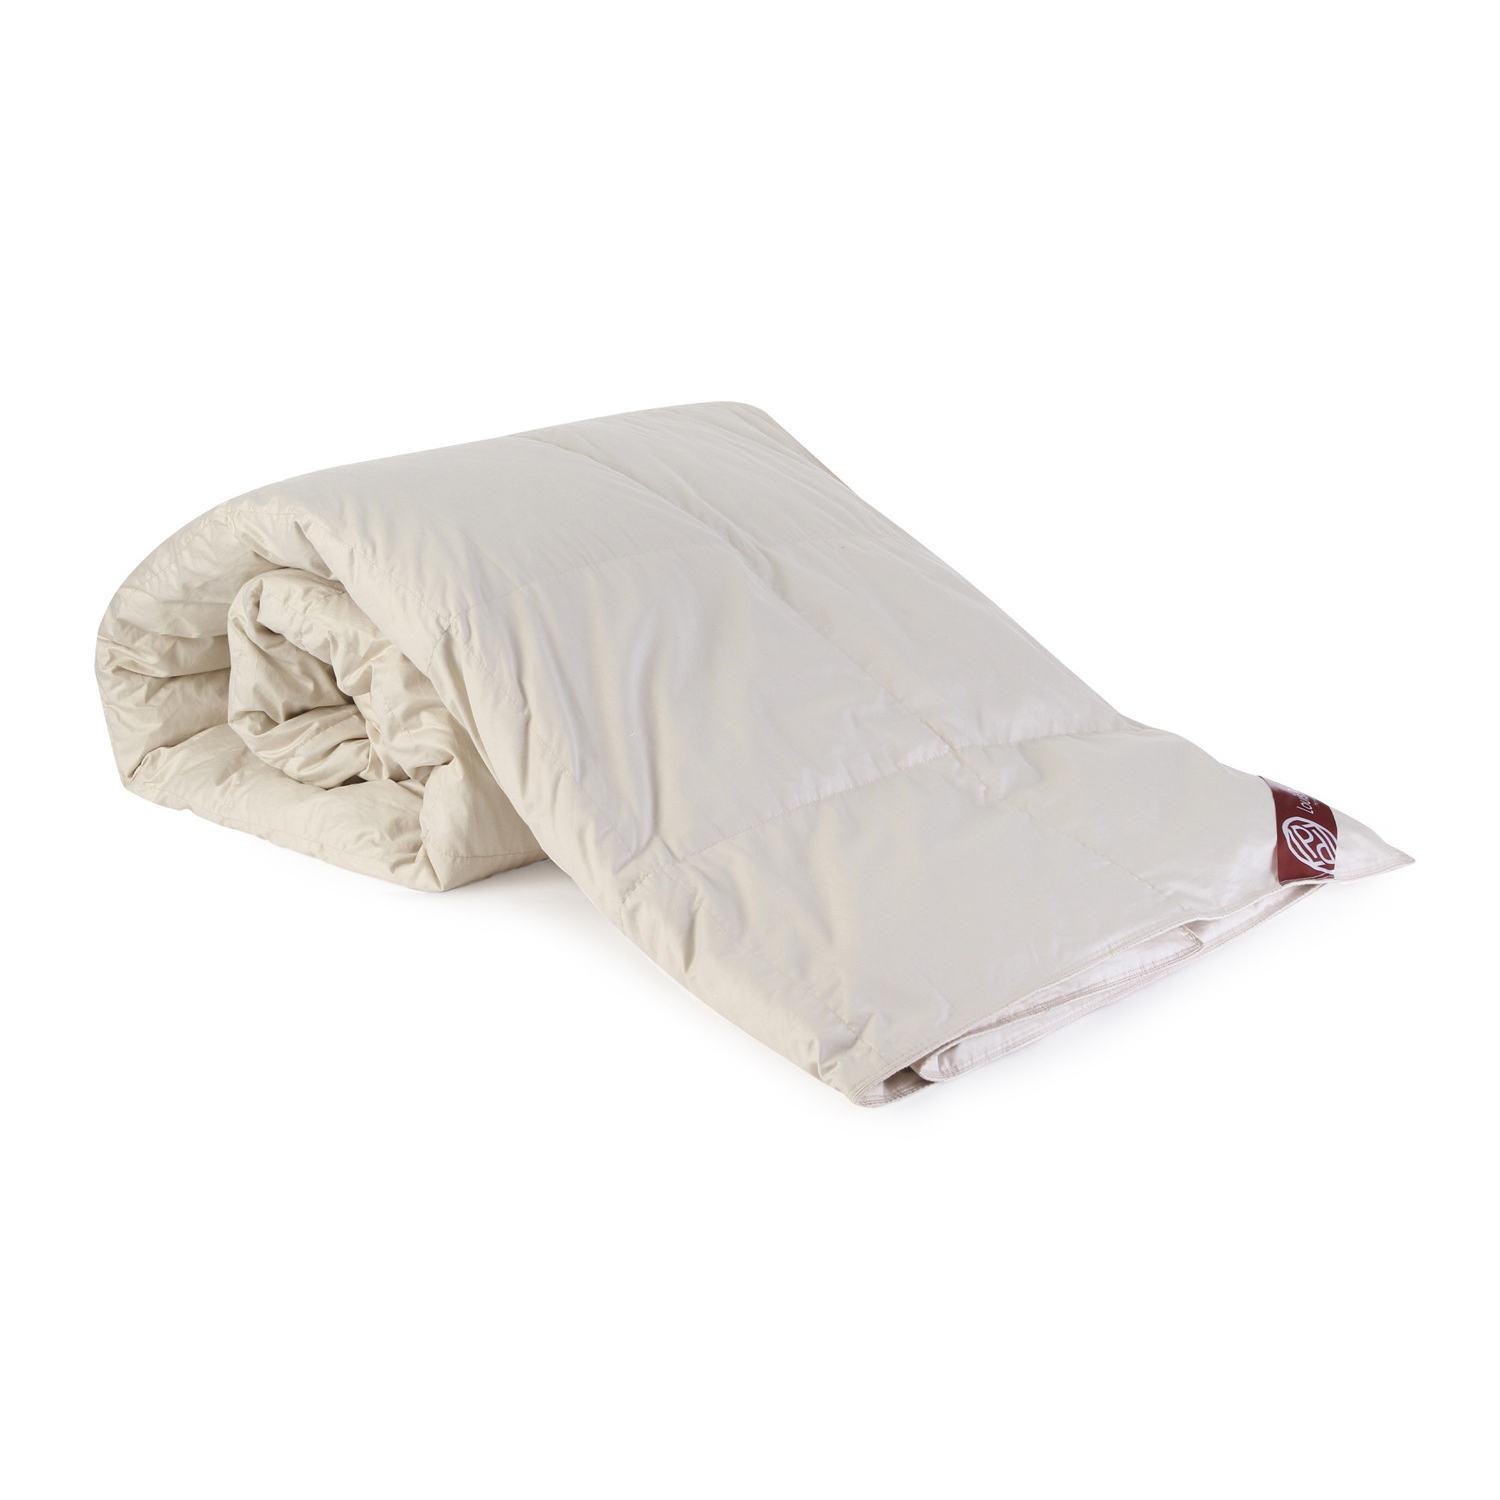 Пуховое одеяло Louis Pascal Николь бежевое 200х220 см (ЛП2022) одеяло louis pascal reina белое 140х200 см lp st